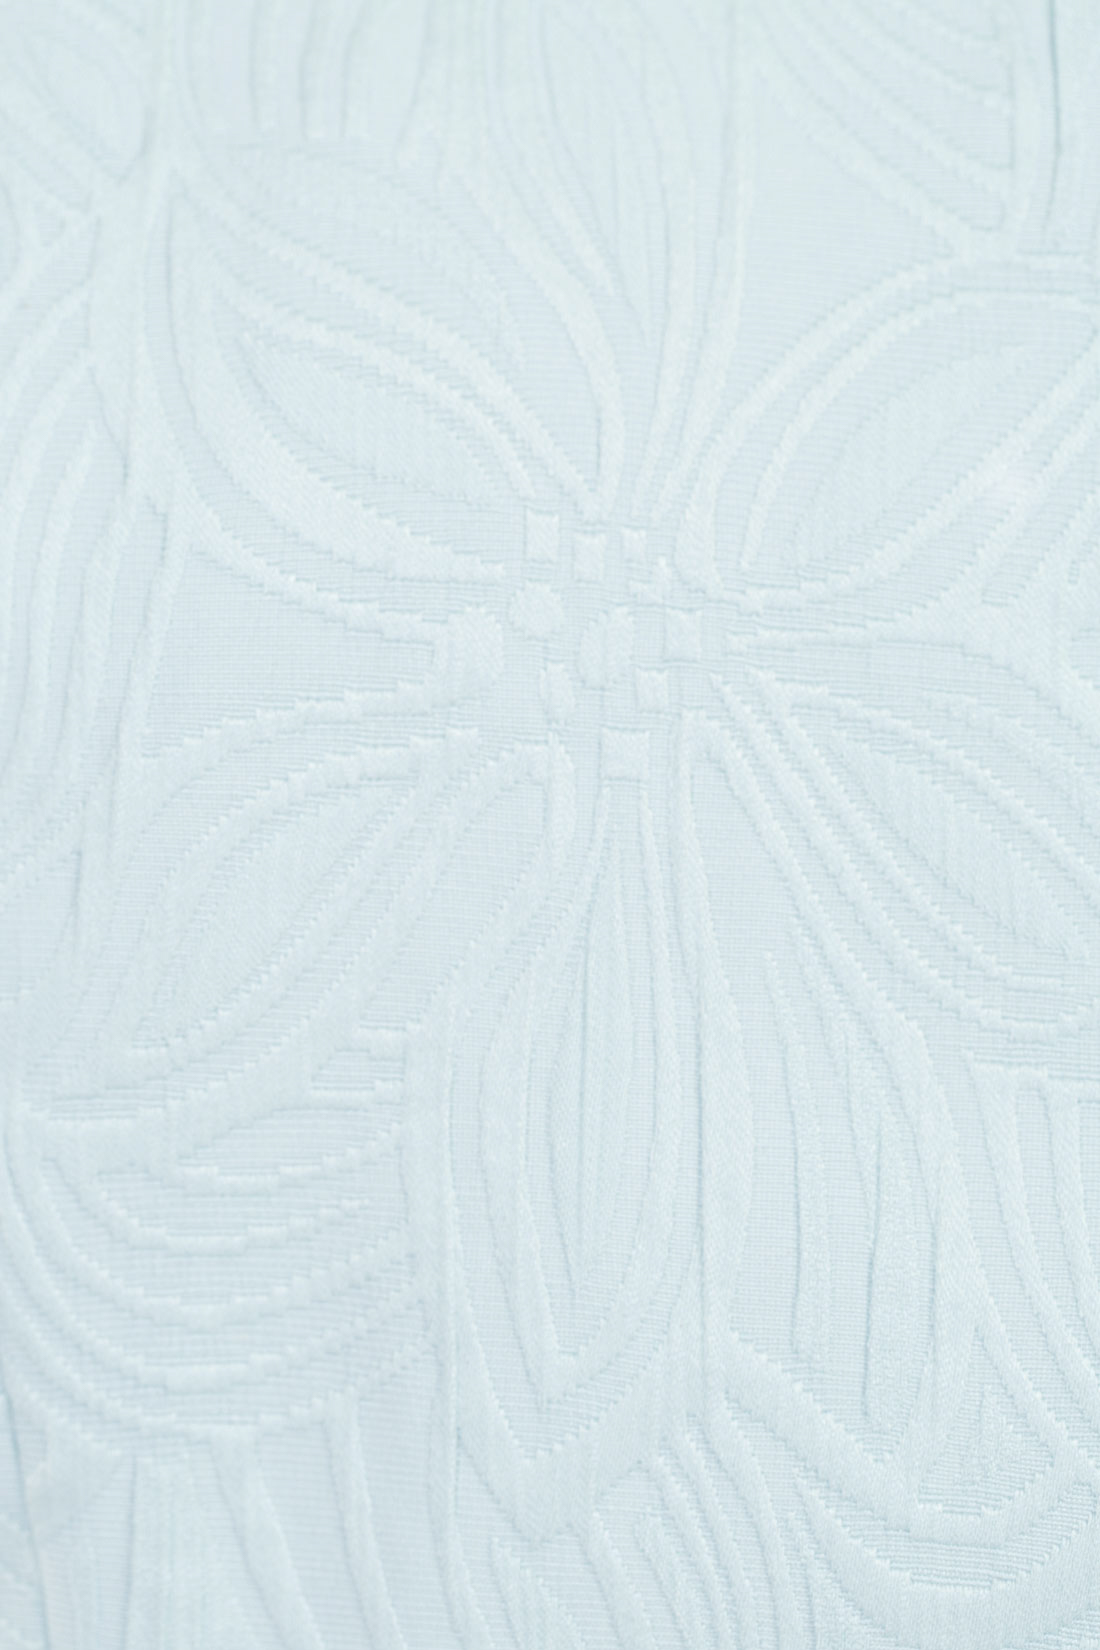 Жакет из жаккардового материала (арт. baon B127012), размер XS, цвет белый Жакет из жаккардового материала (арт. baon B127012) - фото 3